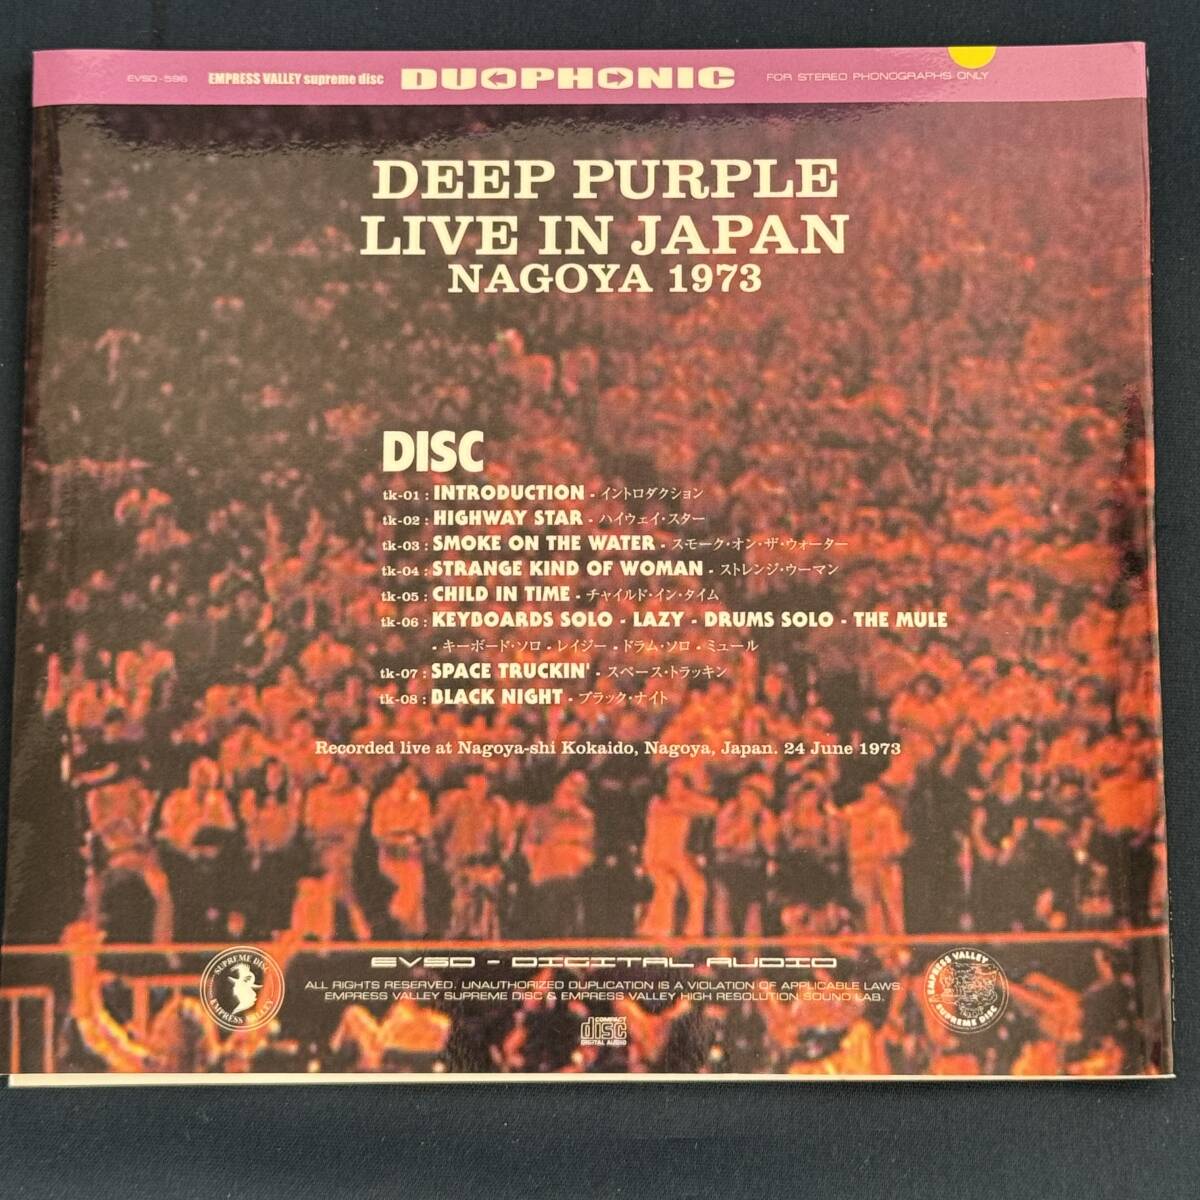 [CD] DEEP PURPLE /LIVE IN JAPAN NAGOYA 1973 Ritchie Blackmore Ian Gillan ROCK